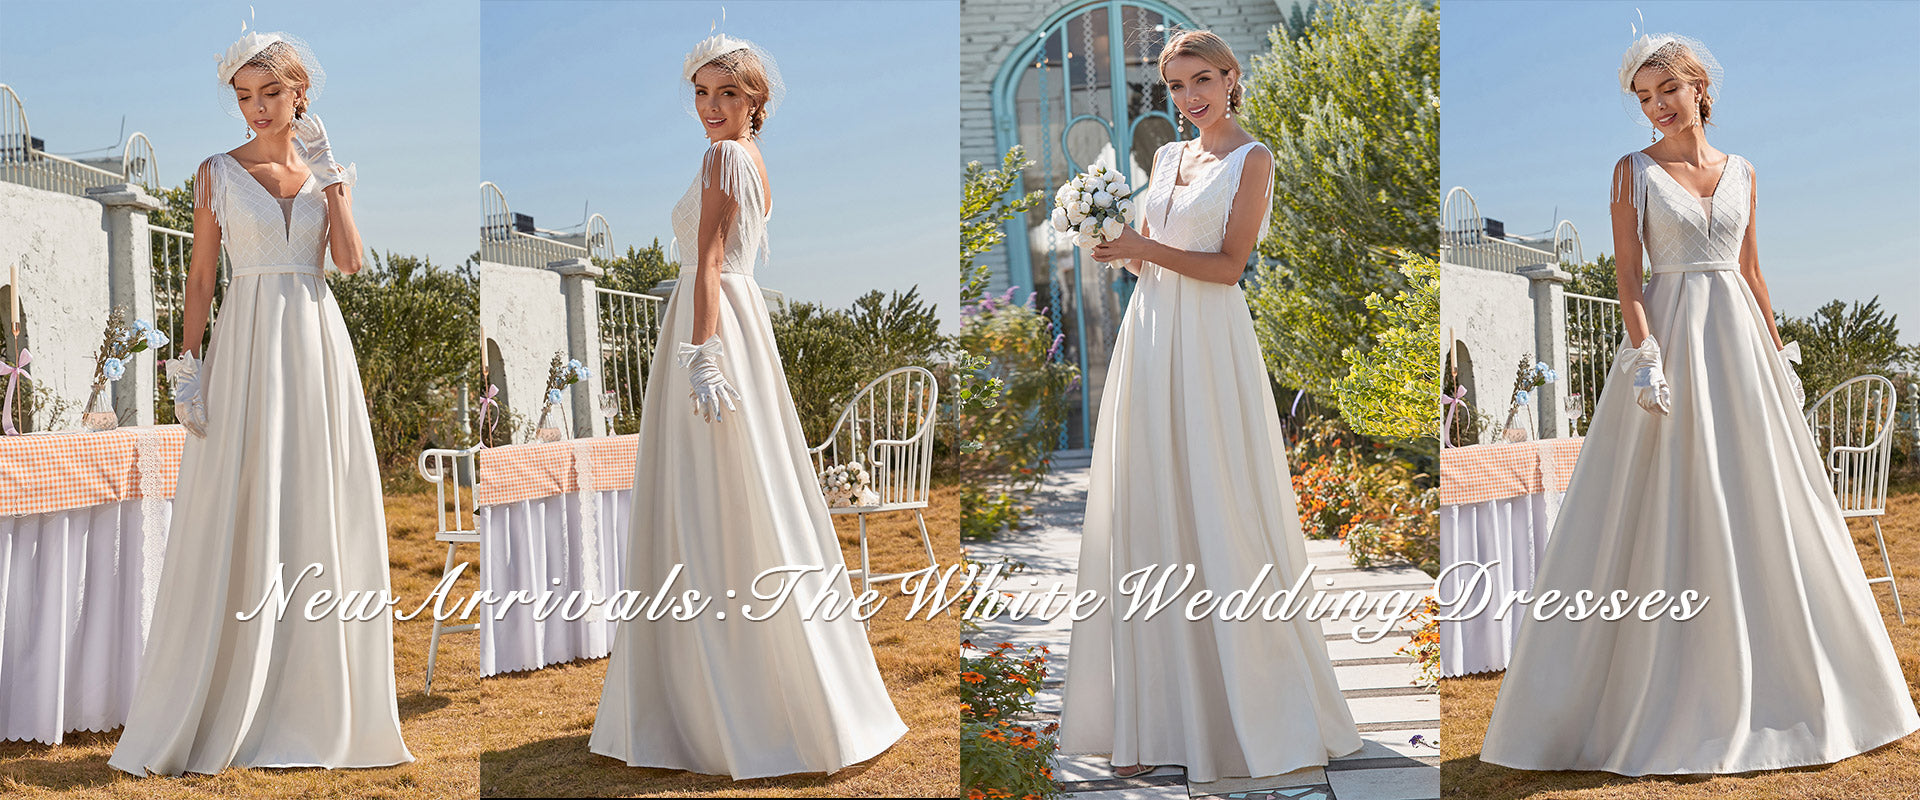 New Arrivals: The White Wedding Dresses